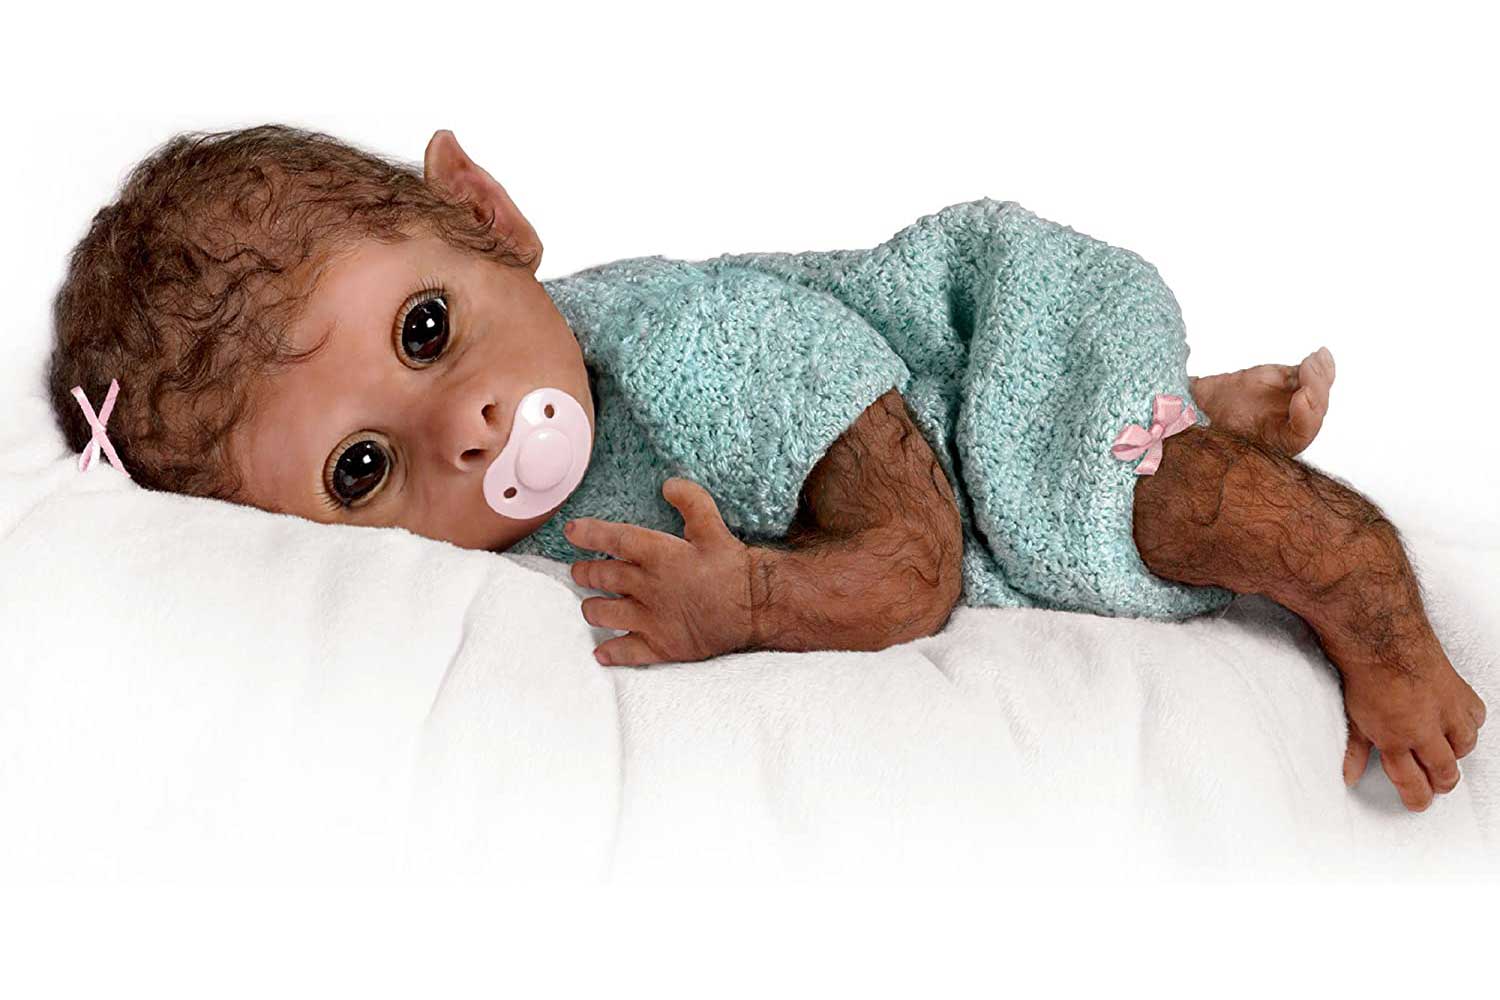 monkey dolls that look real